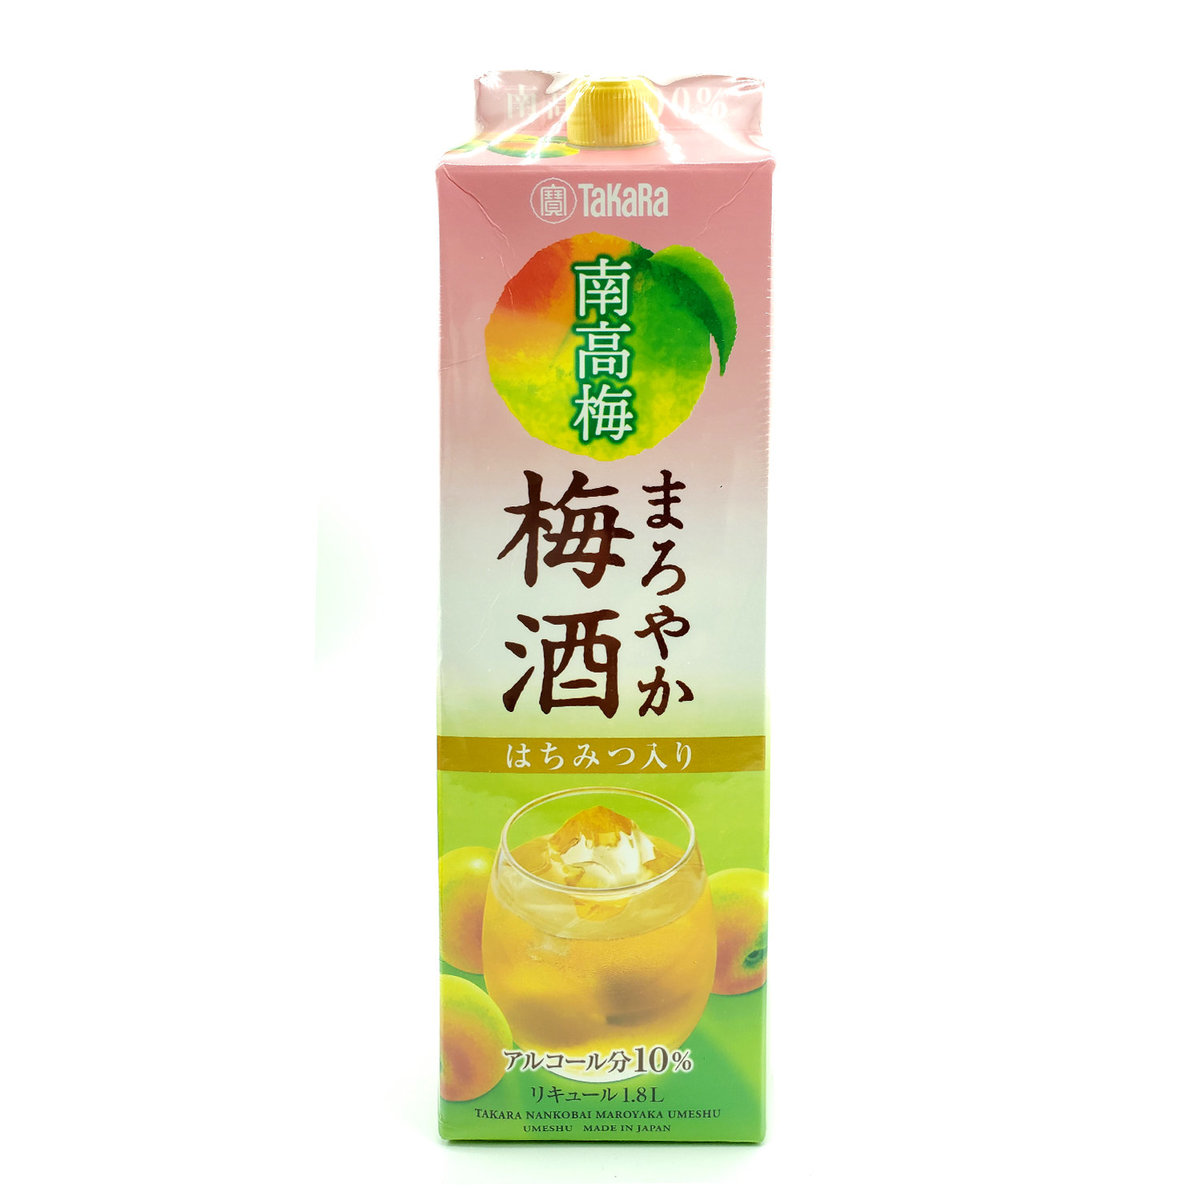 Takara | 日本製南高梅蜂蜜梅酒紙盒大包裝1.8L | HKTVmall 香港最大